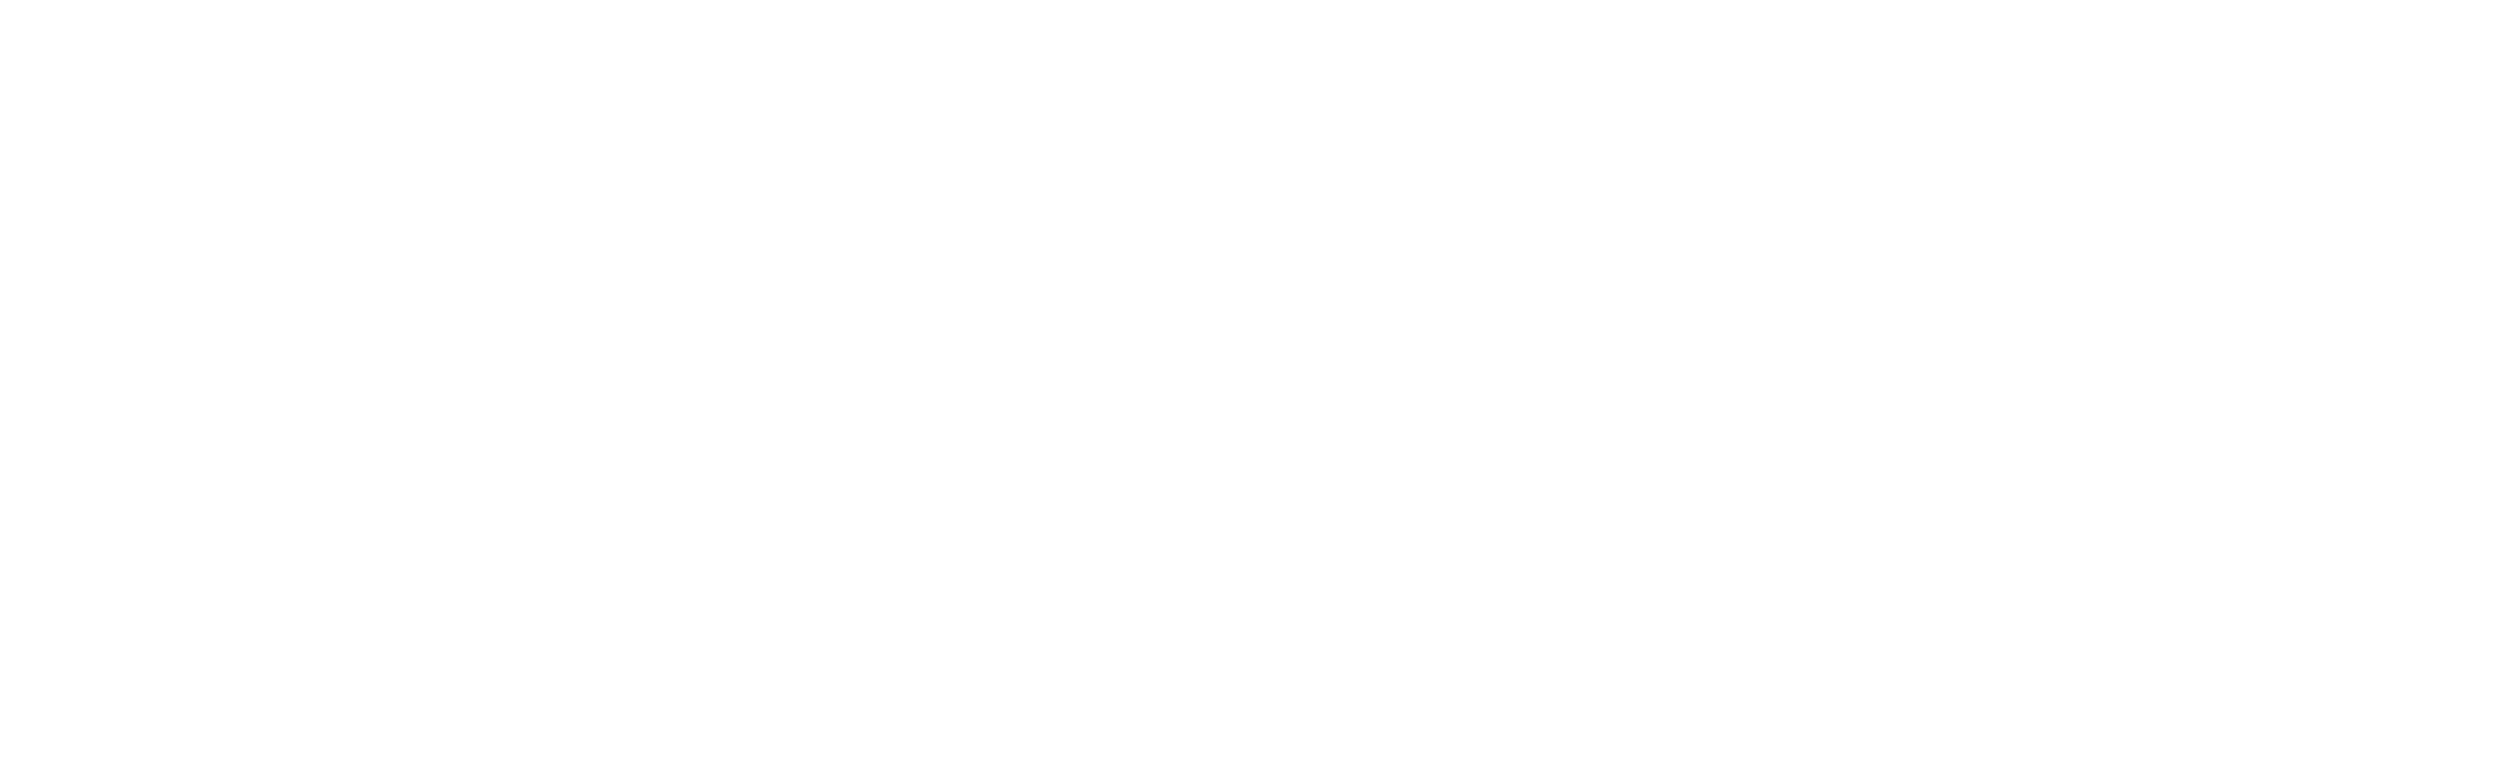 Valley Isle Community Federal Credit Union logo